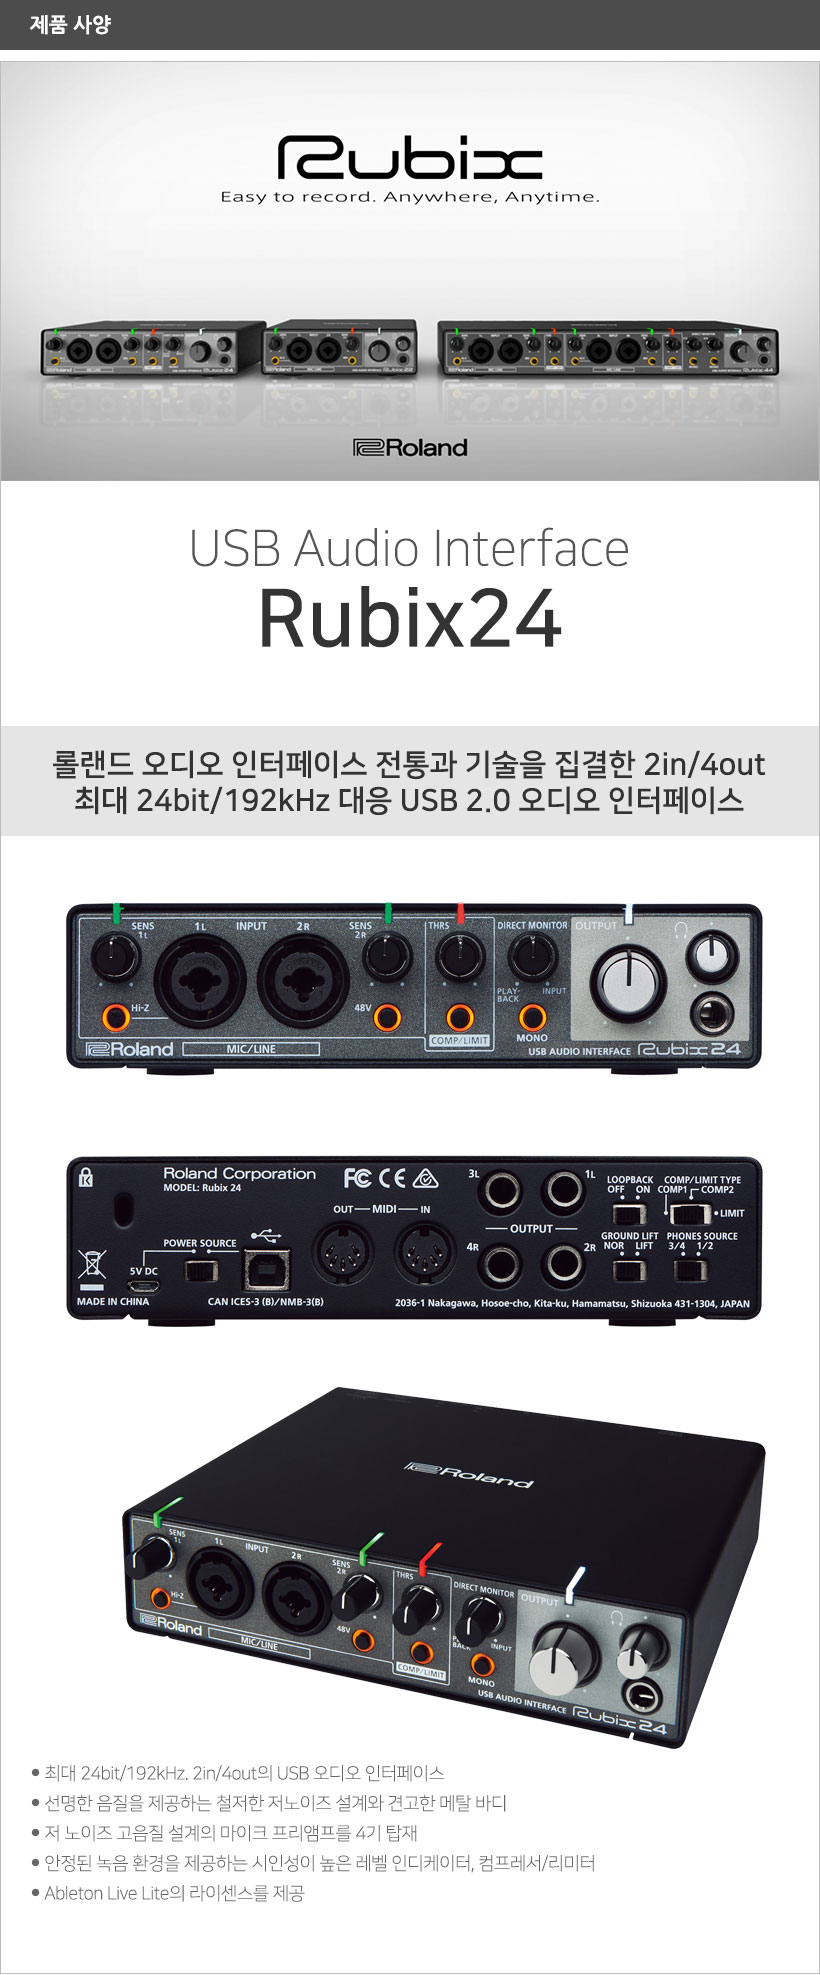 Rubix24 제품사양